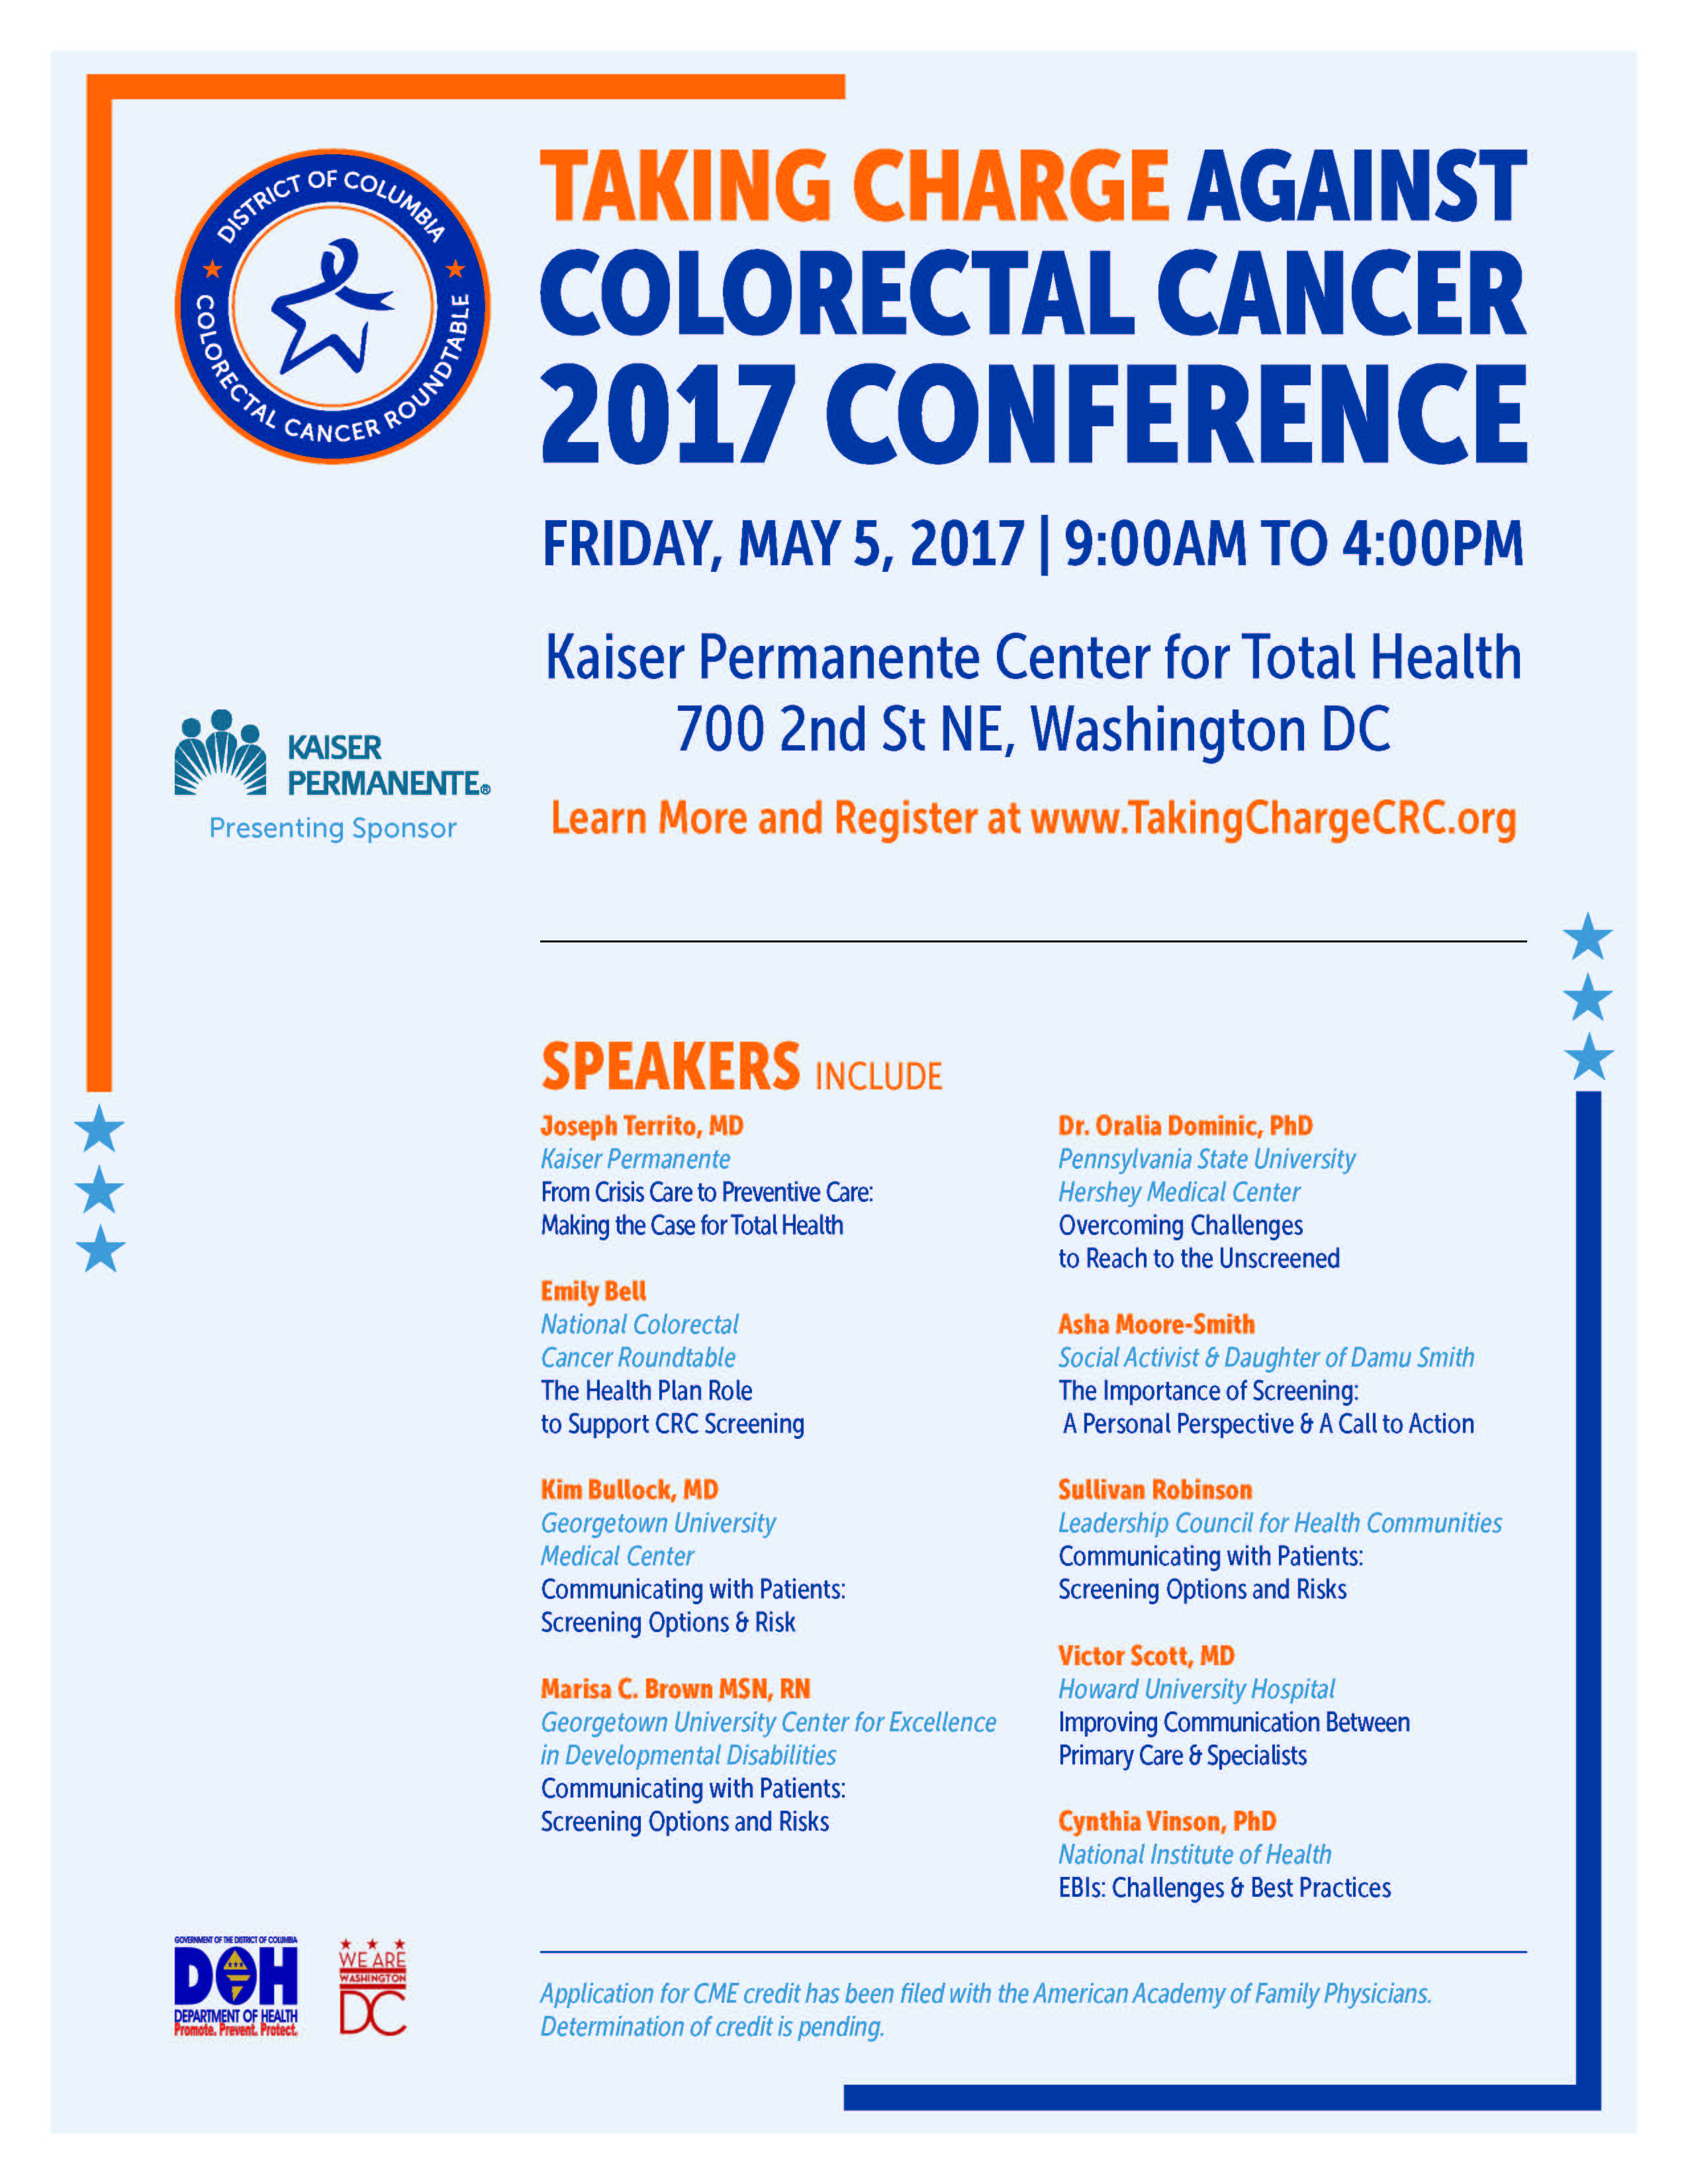 DOH Colorectal Conference Flyer